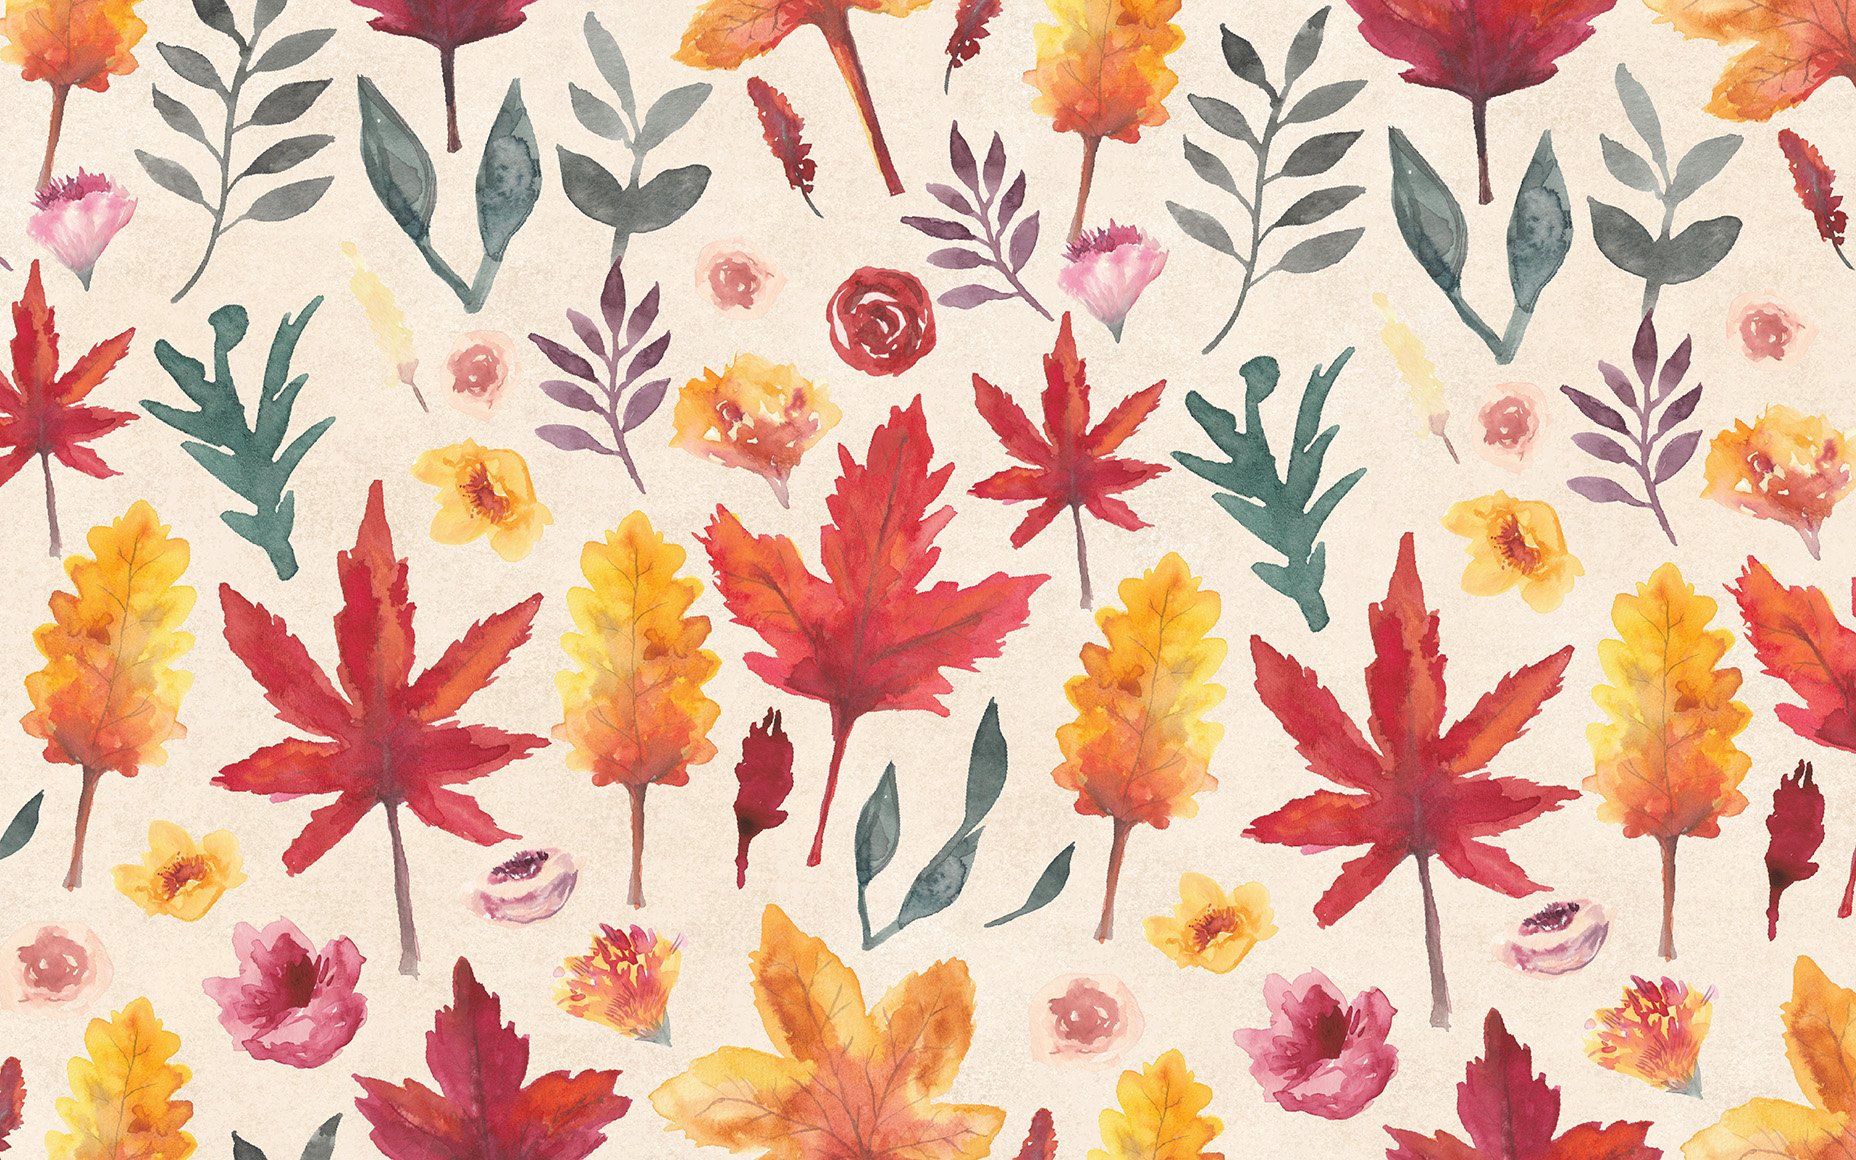 October Freebie: Fall Foliage Wallpaper Download